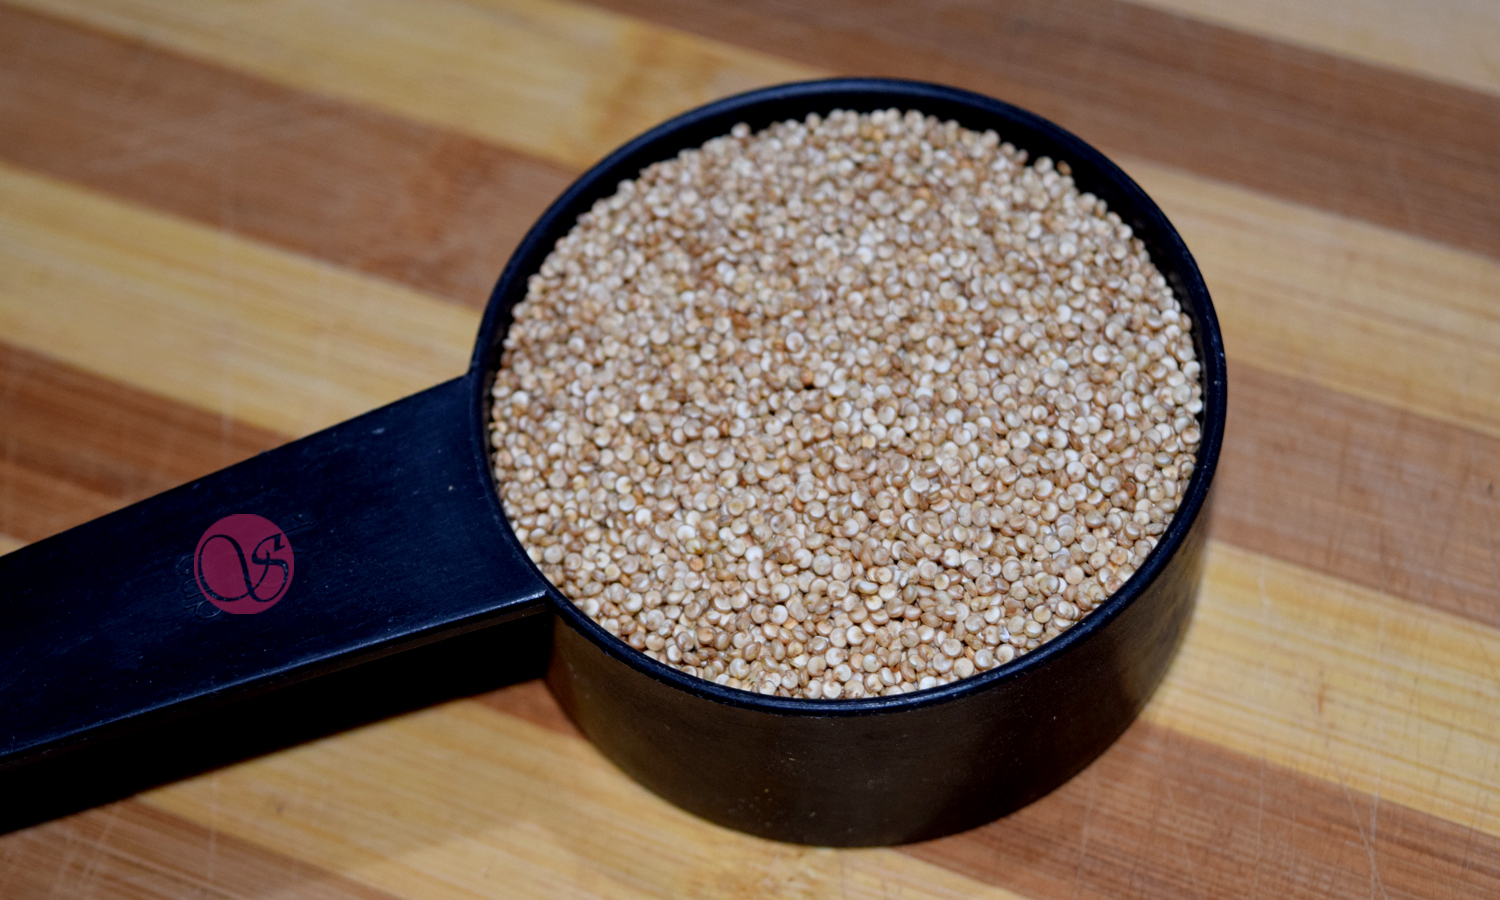 Roasted quinoa